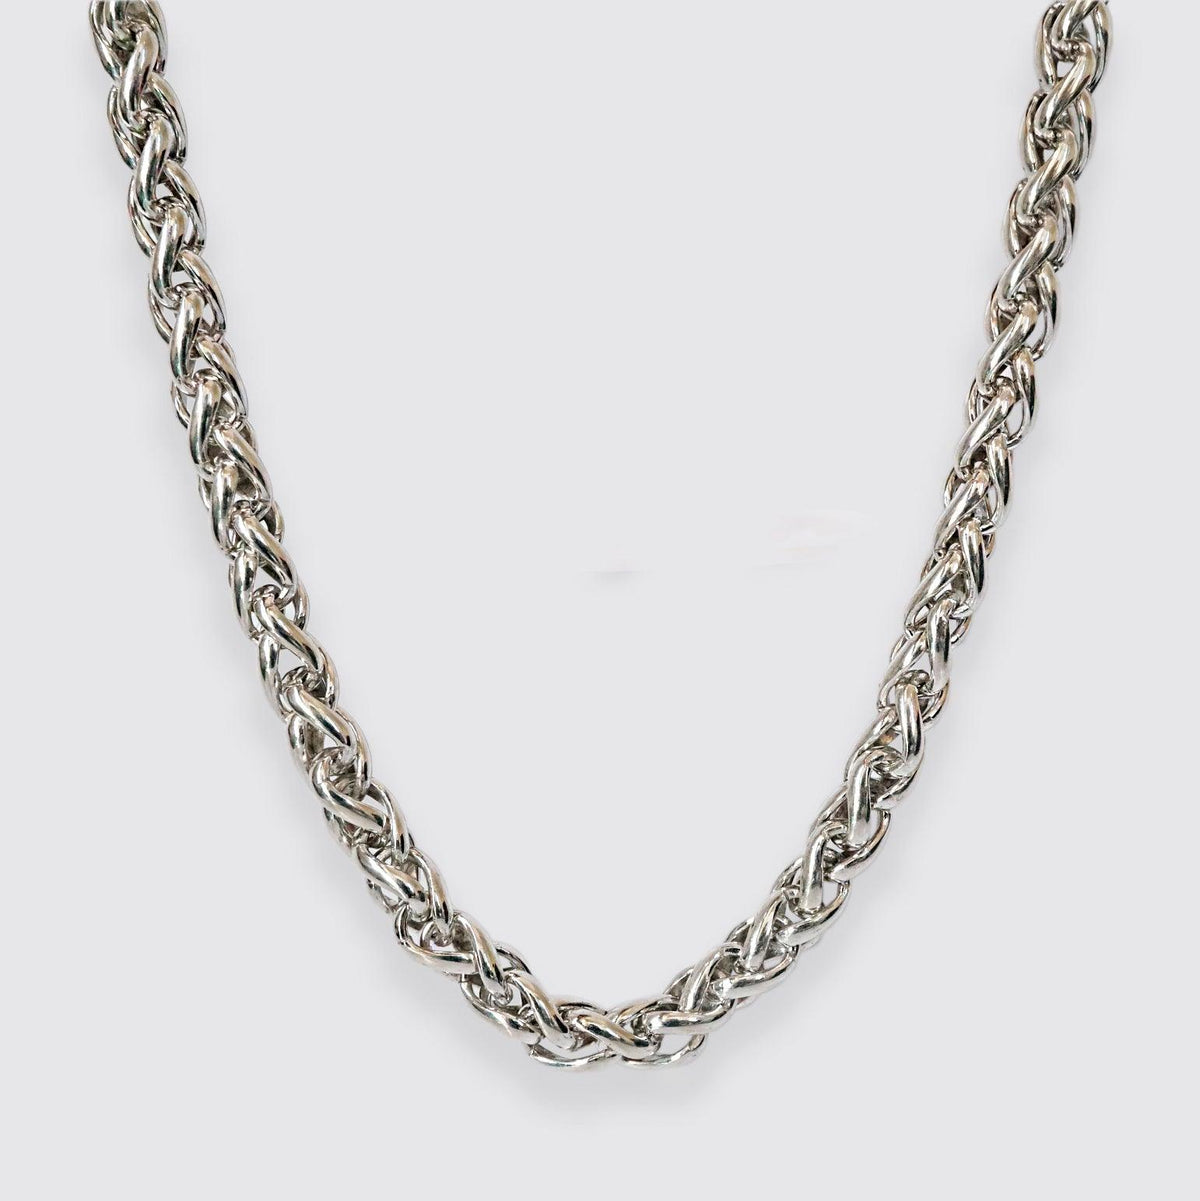 Spiral Chain Necklace, 4mm